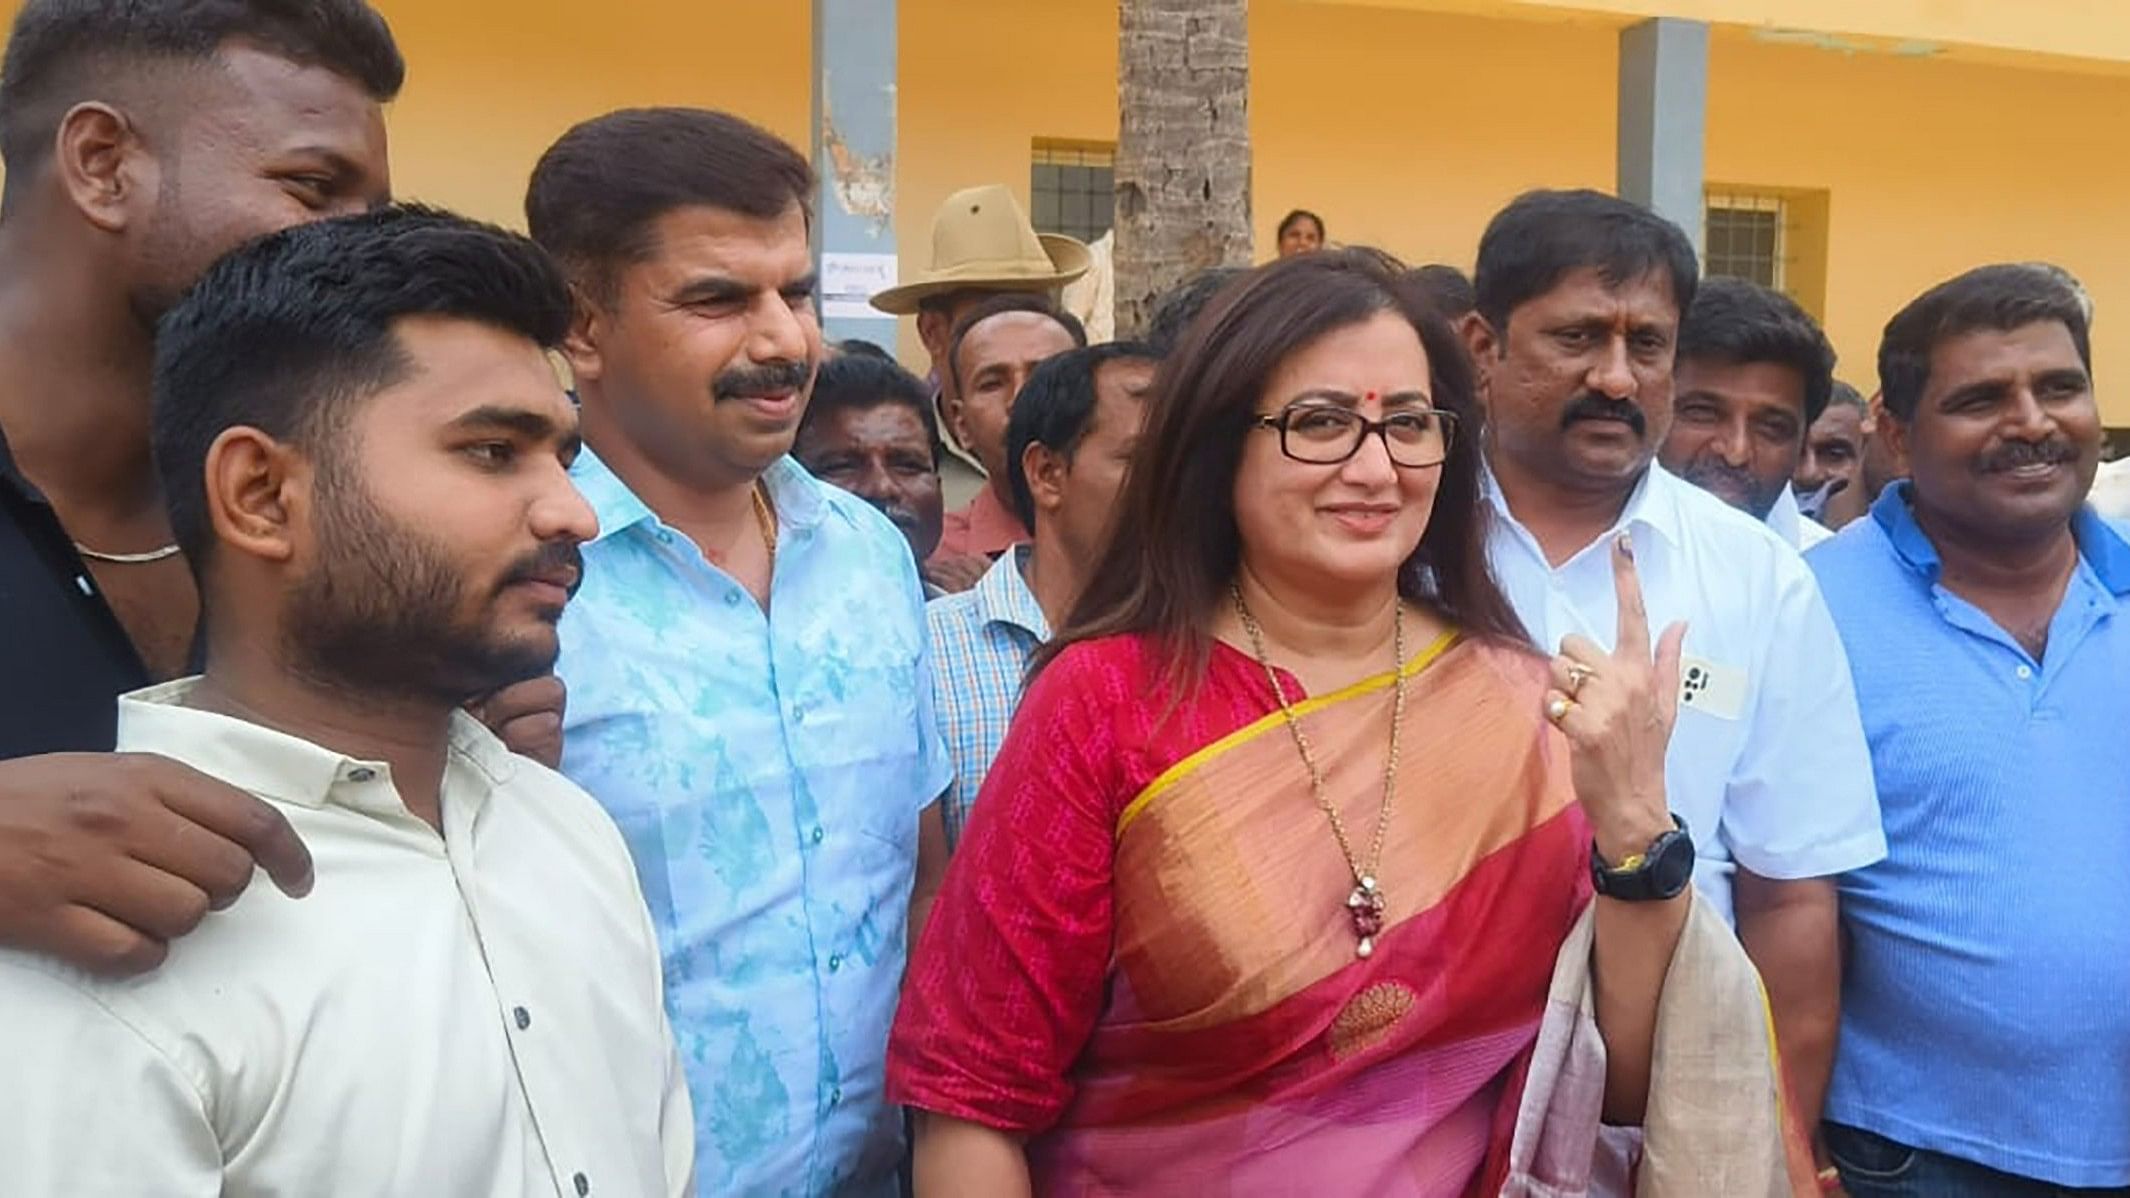 <div class="paragraphs"><p>Incumbent Lok Sabha member from Mandya Sumalatha Ambarish leaves the polling station after casting her vote at Doddarasinakere village in Maddur taluk of Mandya district on Friday. </p></div>